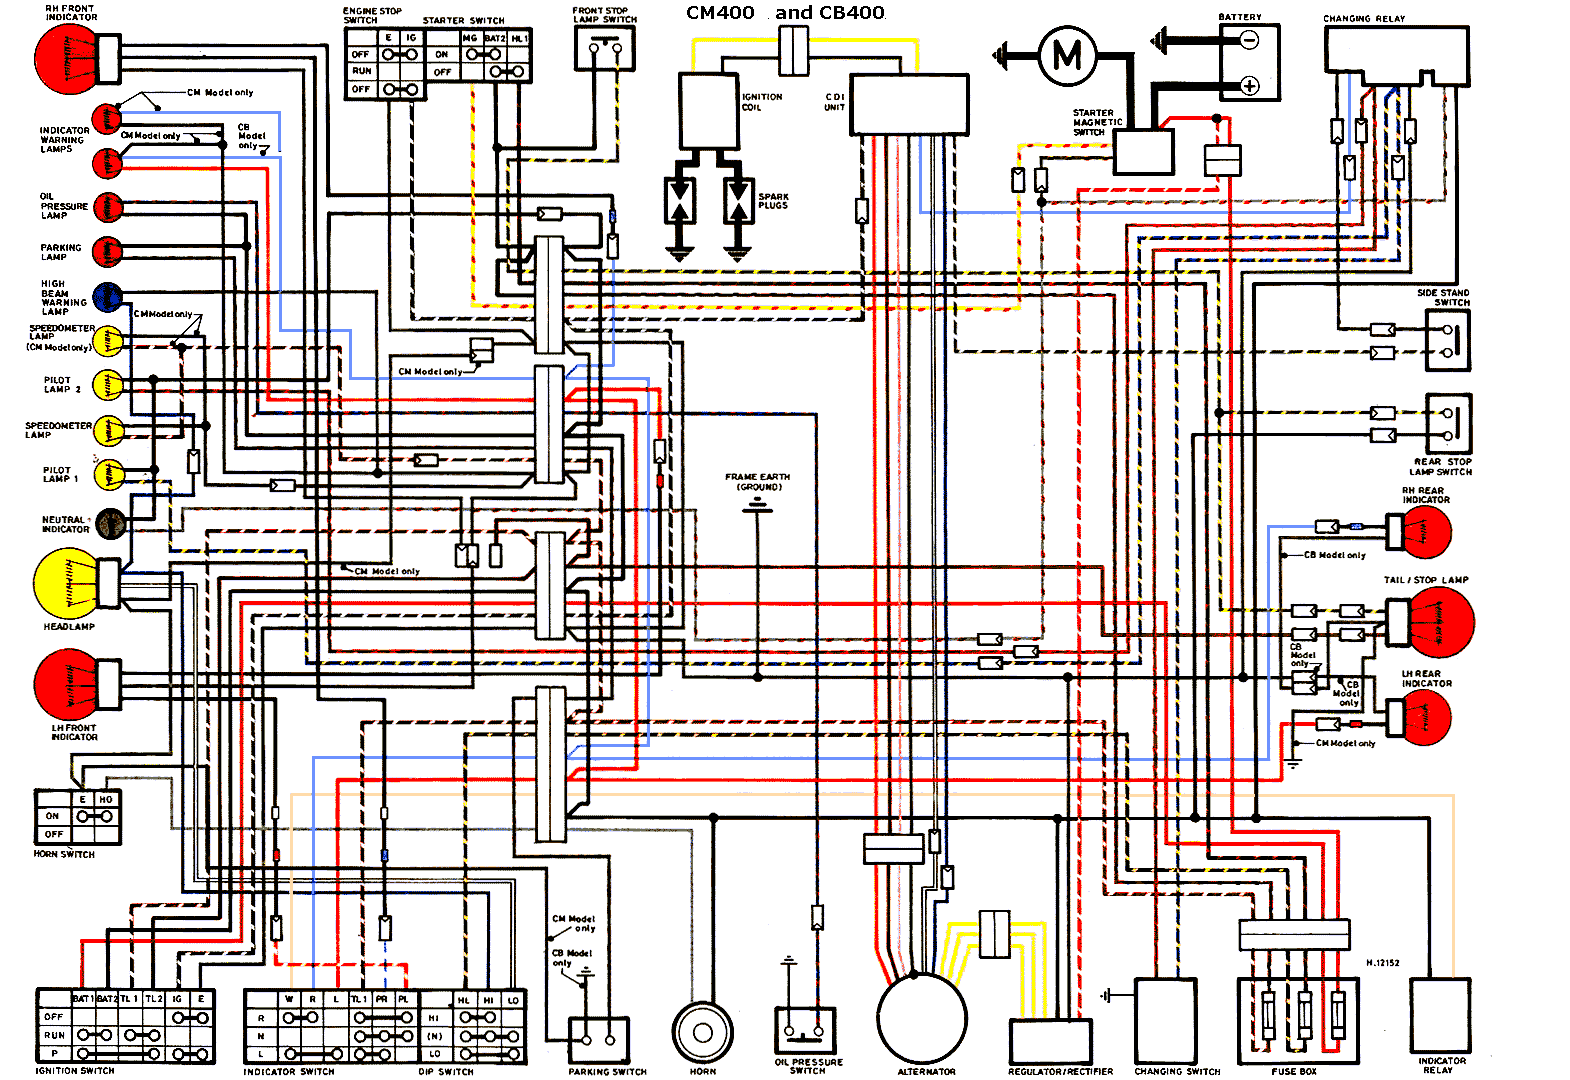 wiring diagram for 1981 honda cm400